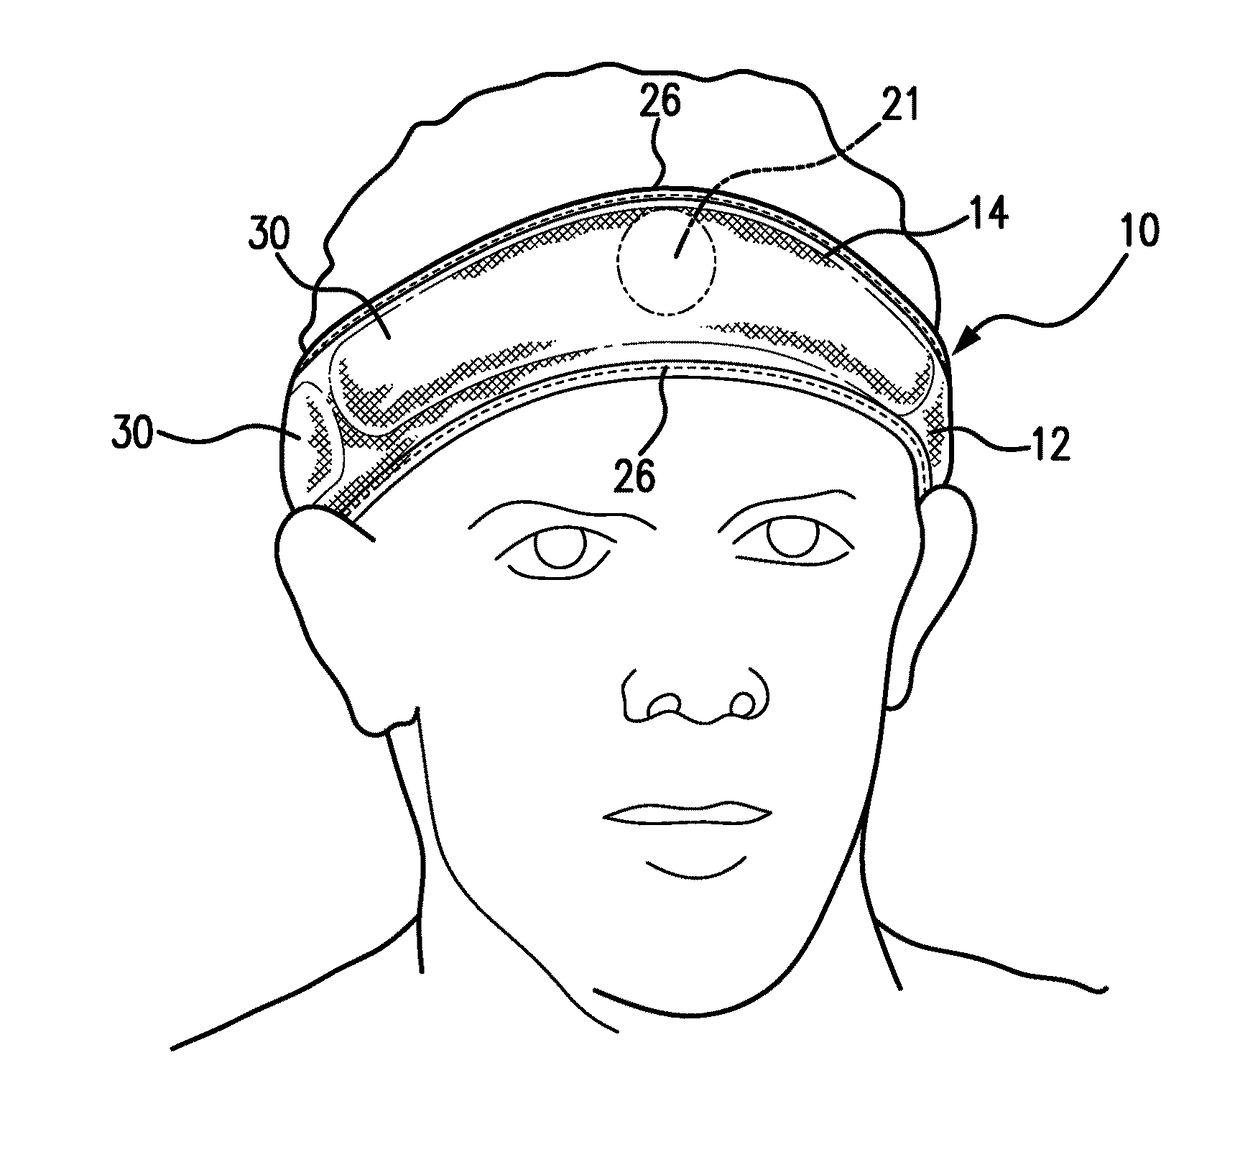 Universal protective headgear